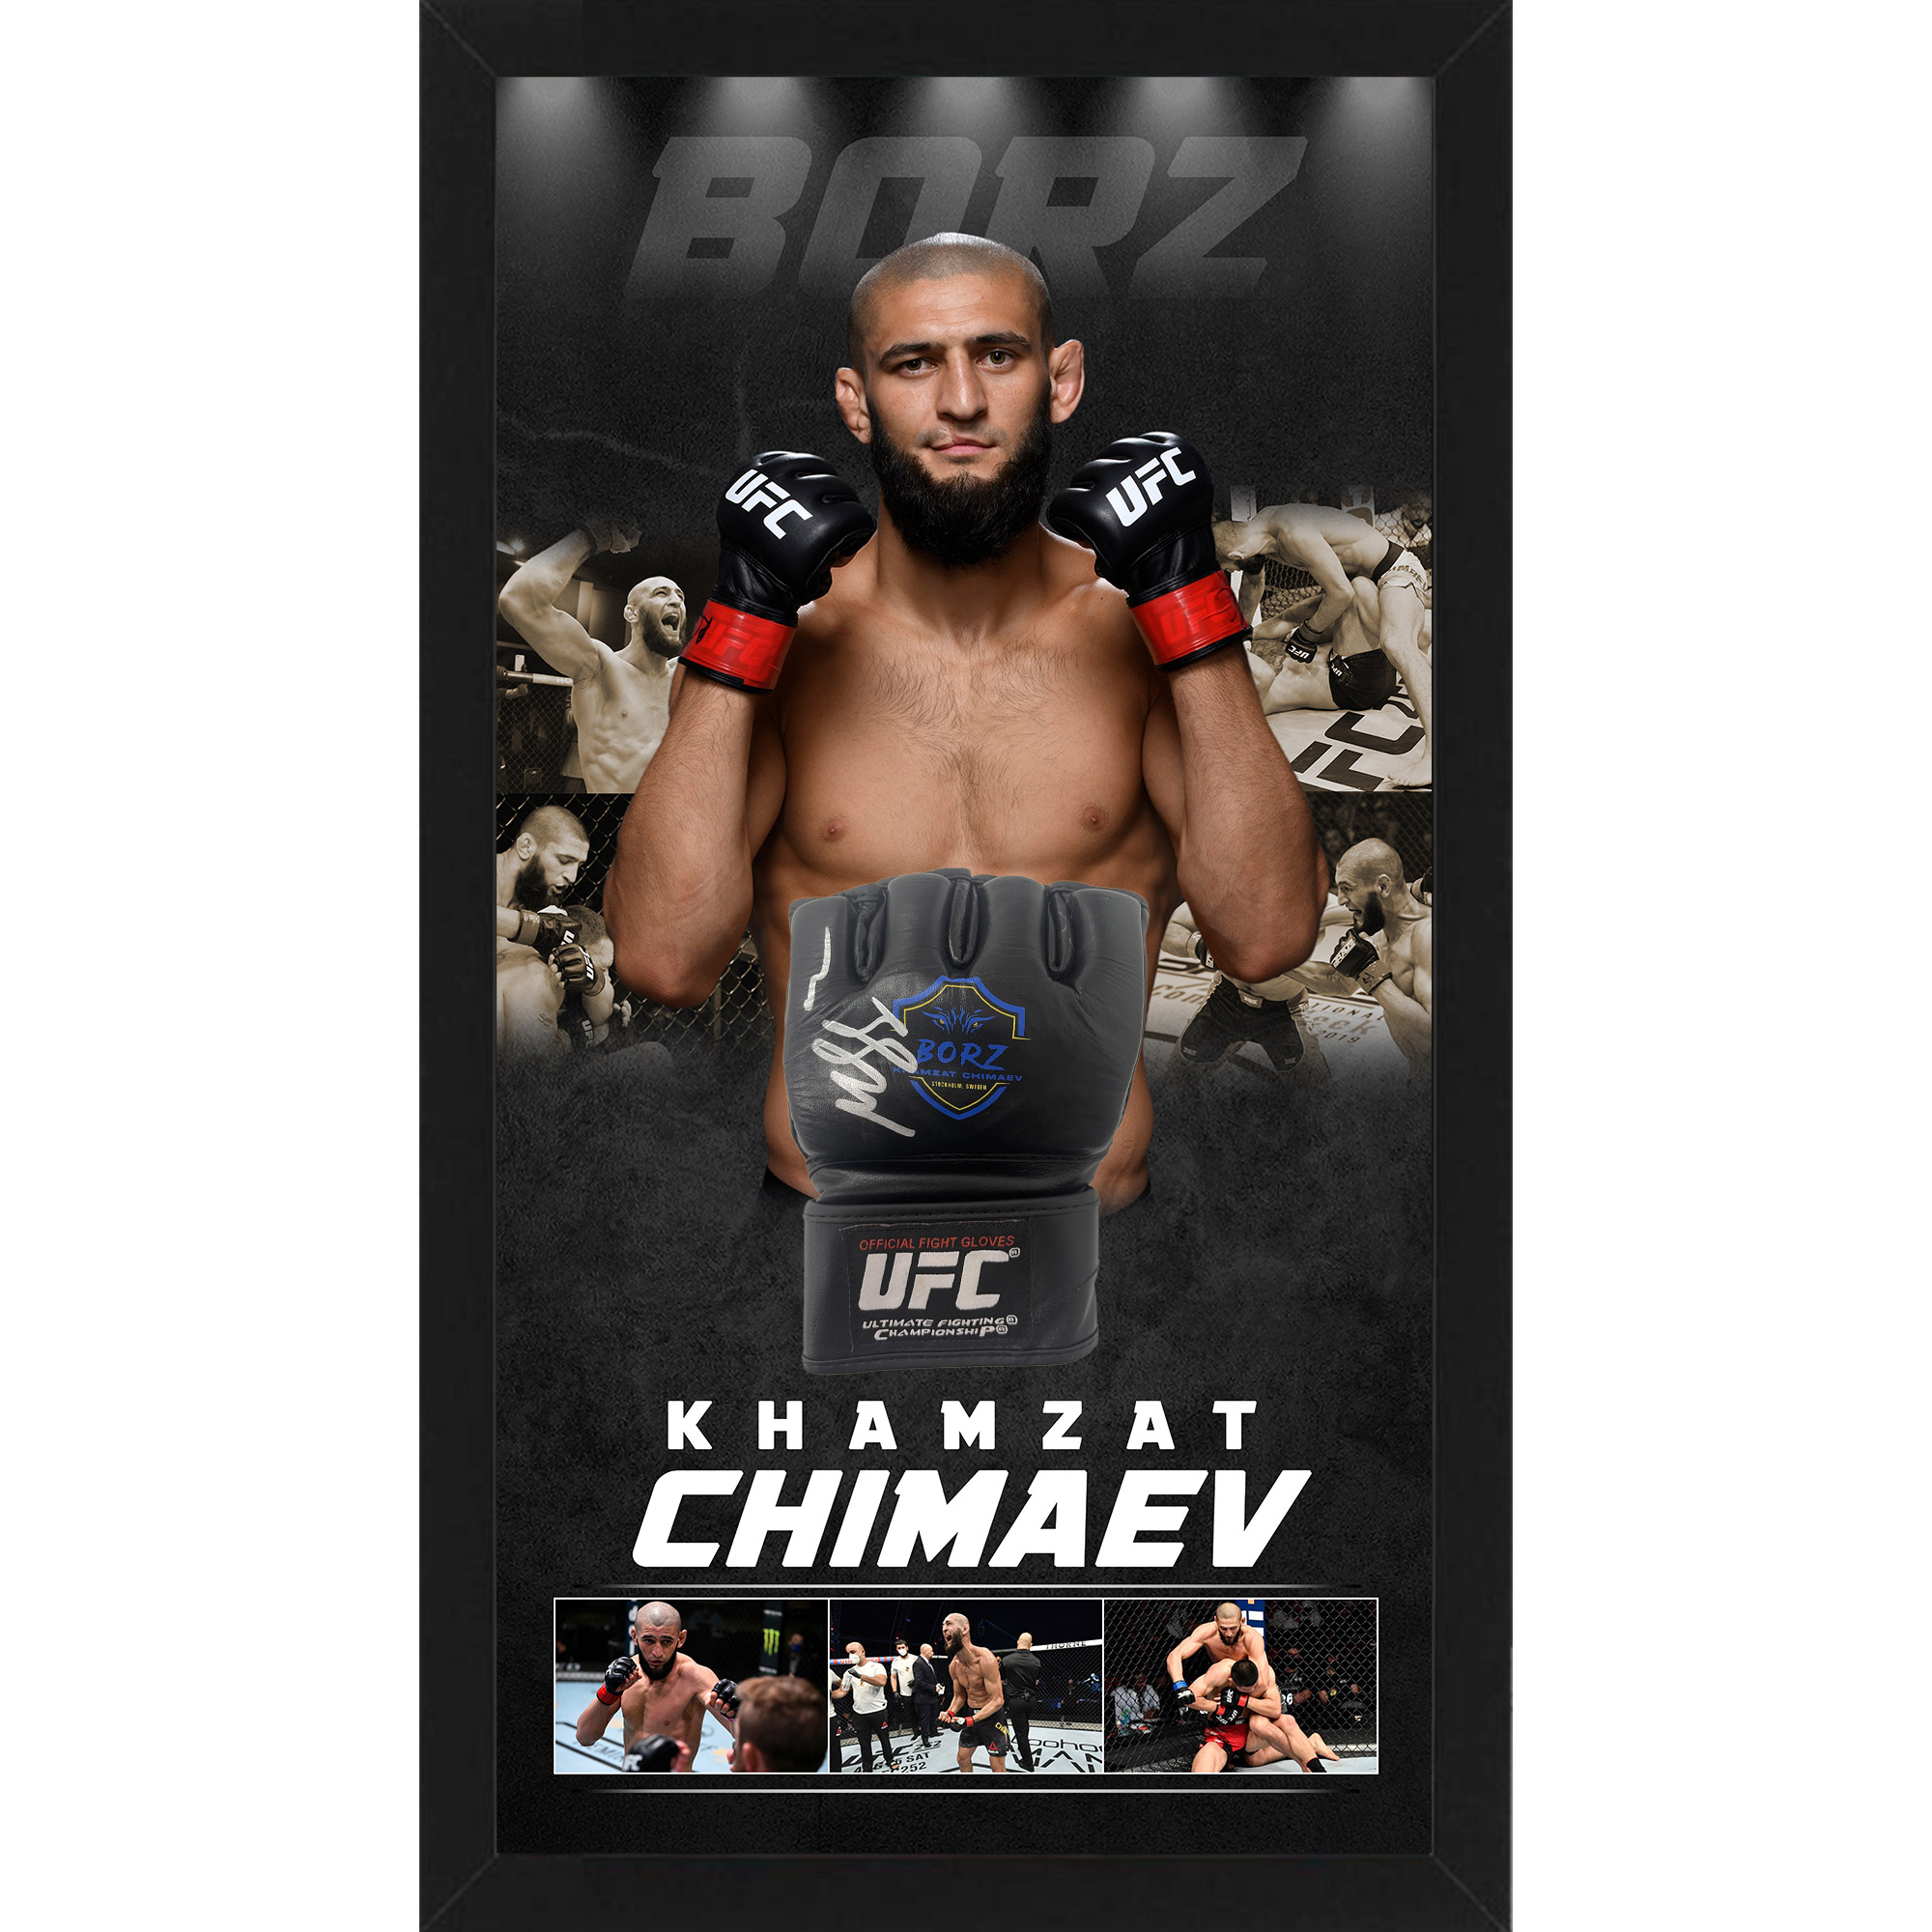 Khamzat Chimaev サイン入りグローブ UFC グローブ PSA